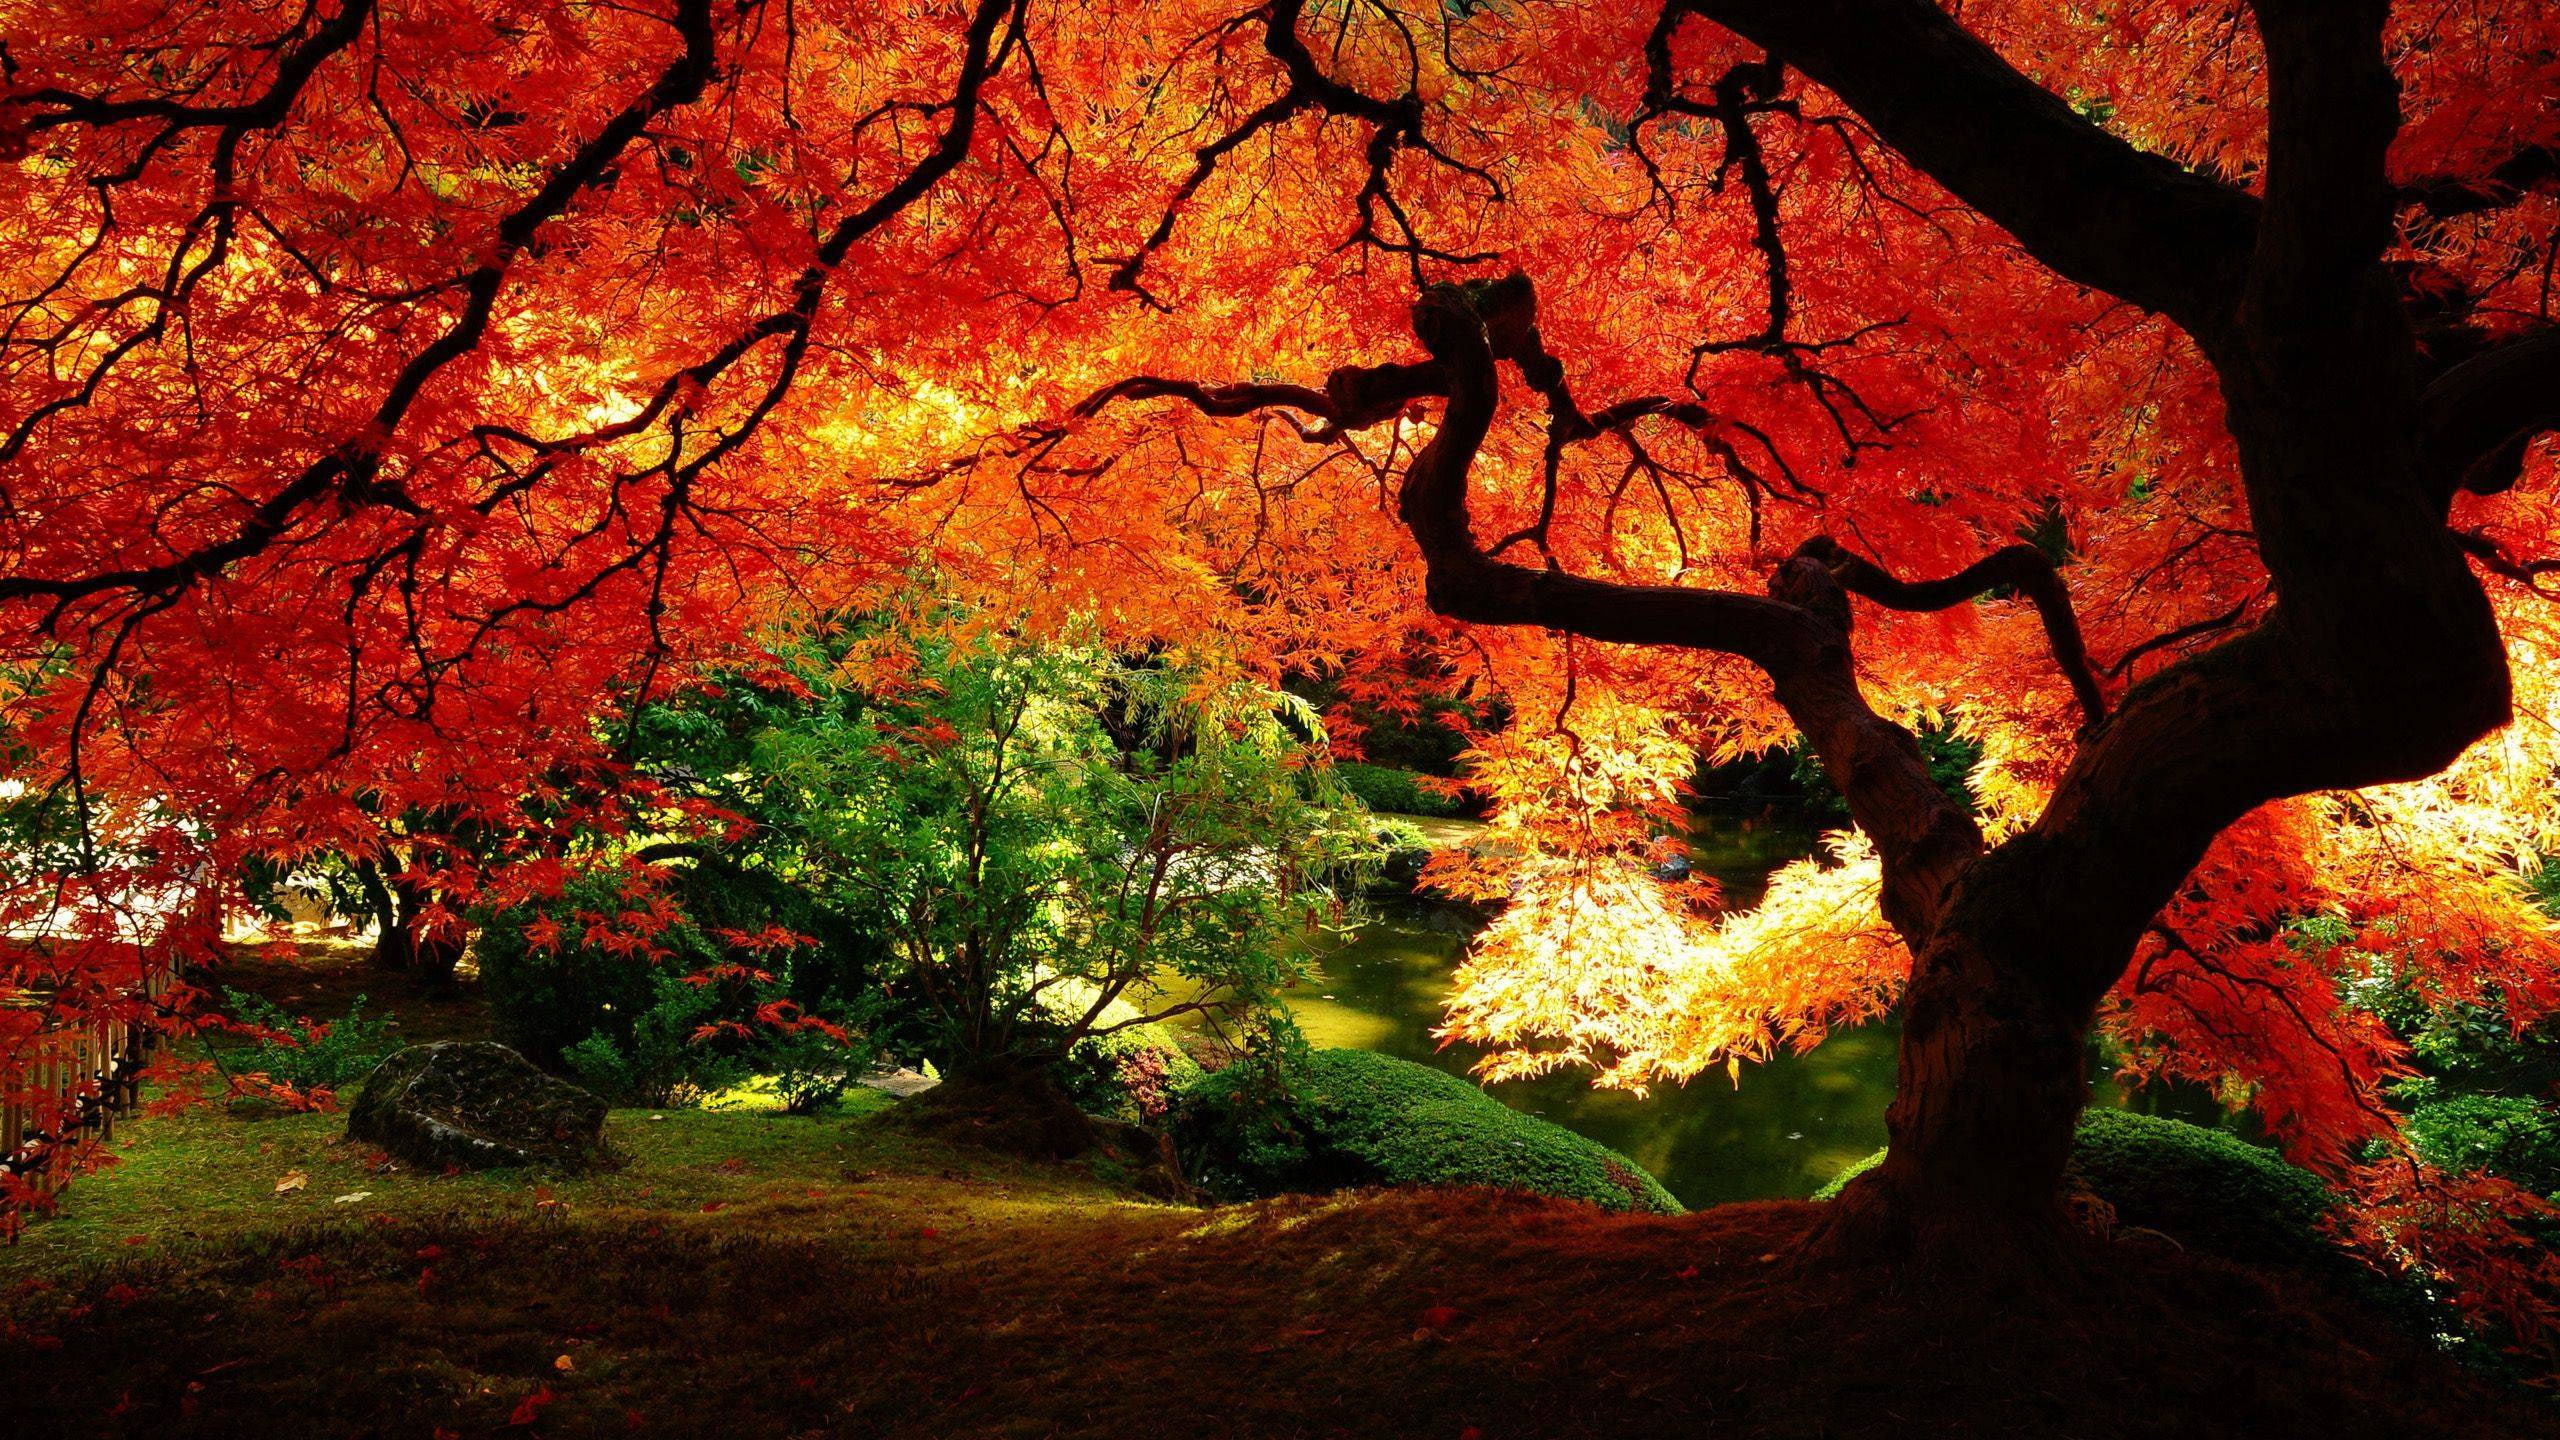 arboles, bosque, naturaleza, tree, plant, change, autumn, beauty in nature